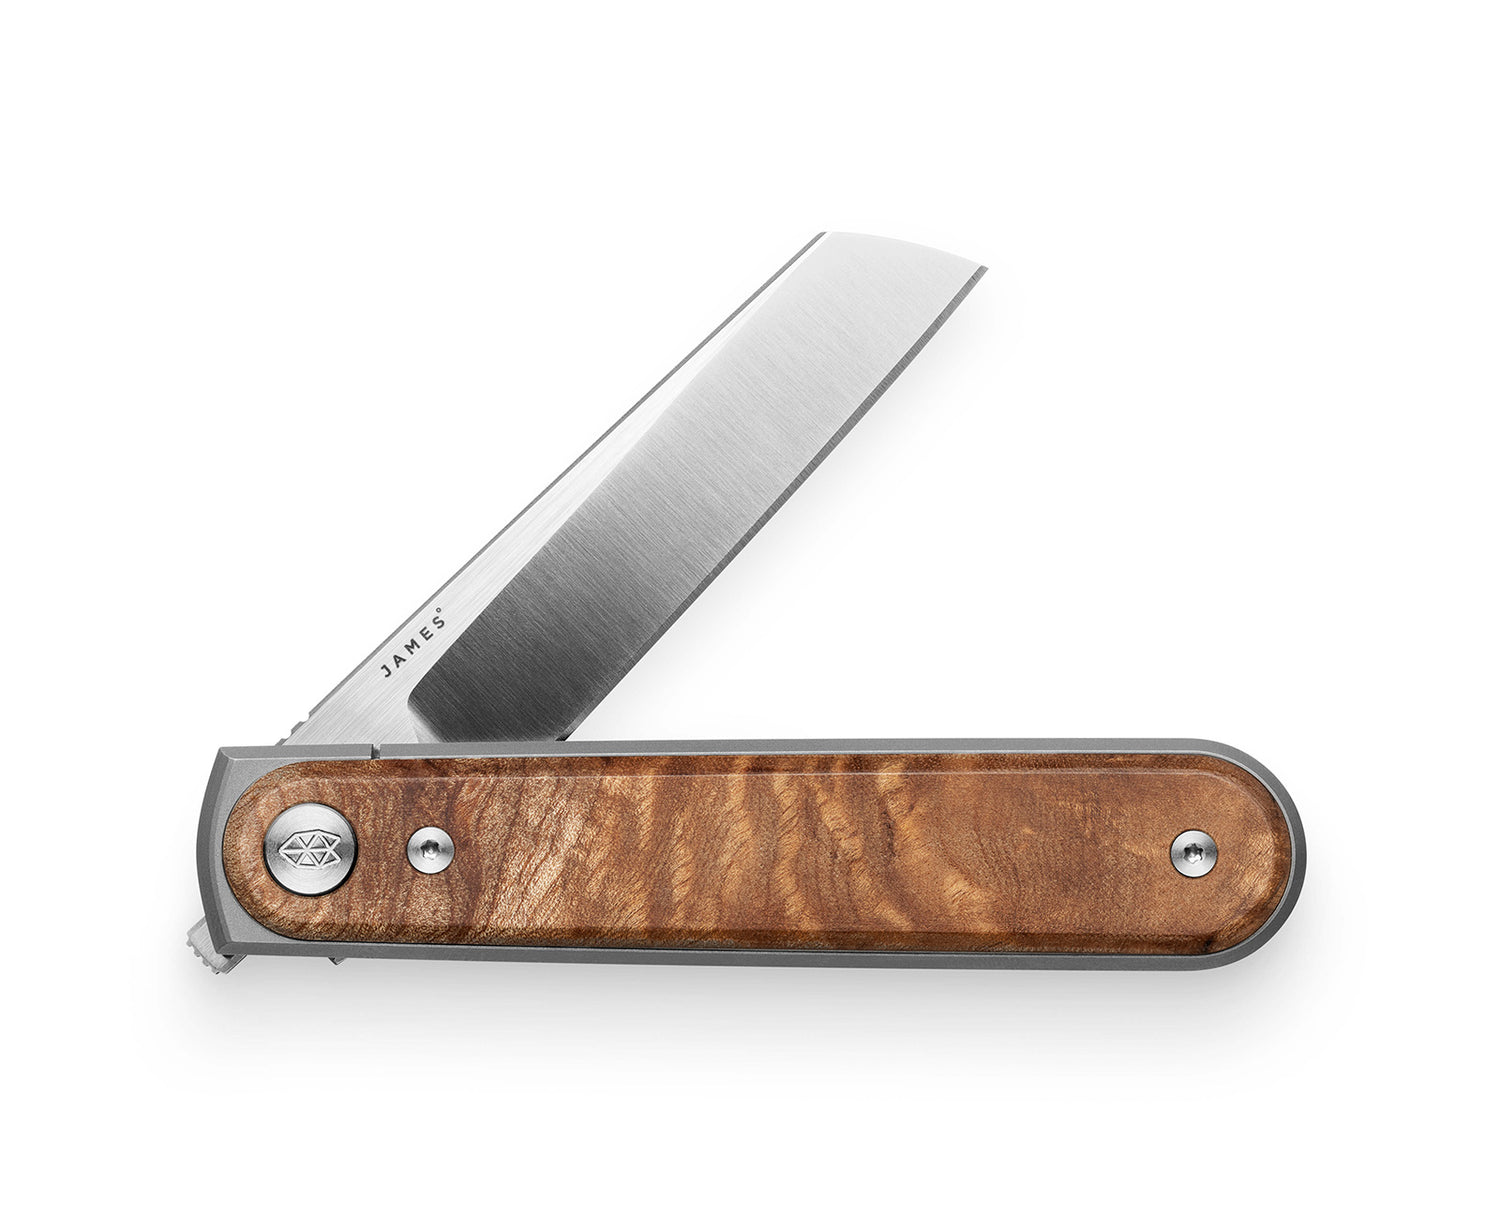 The Modern Pocket Knife